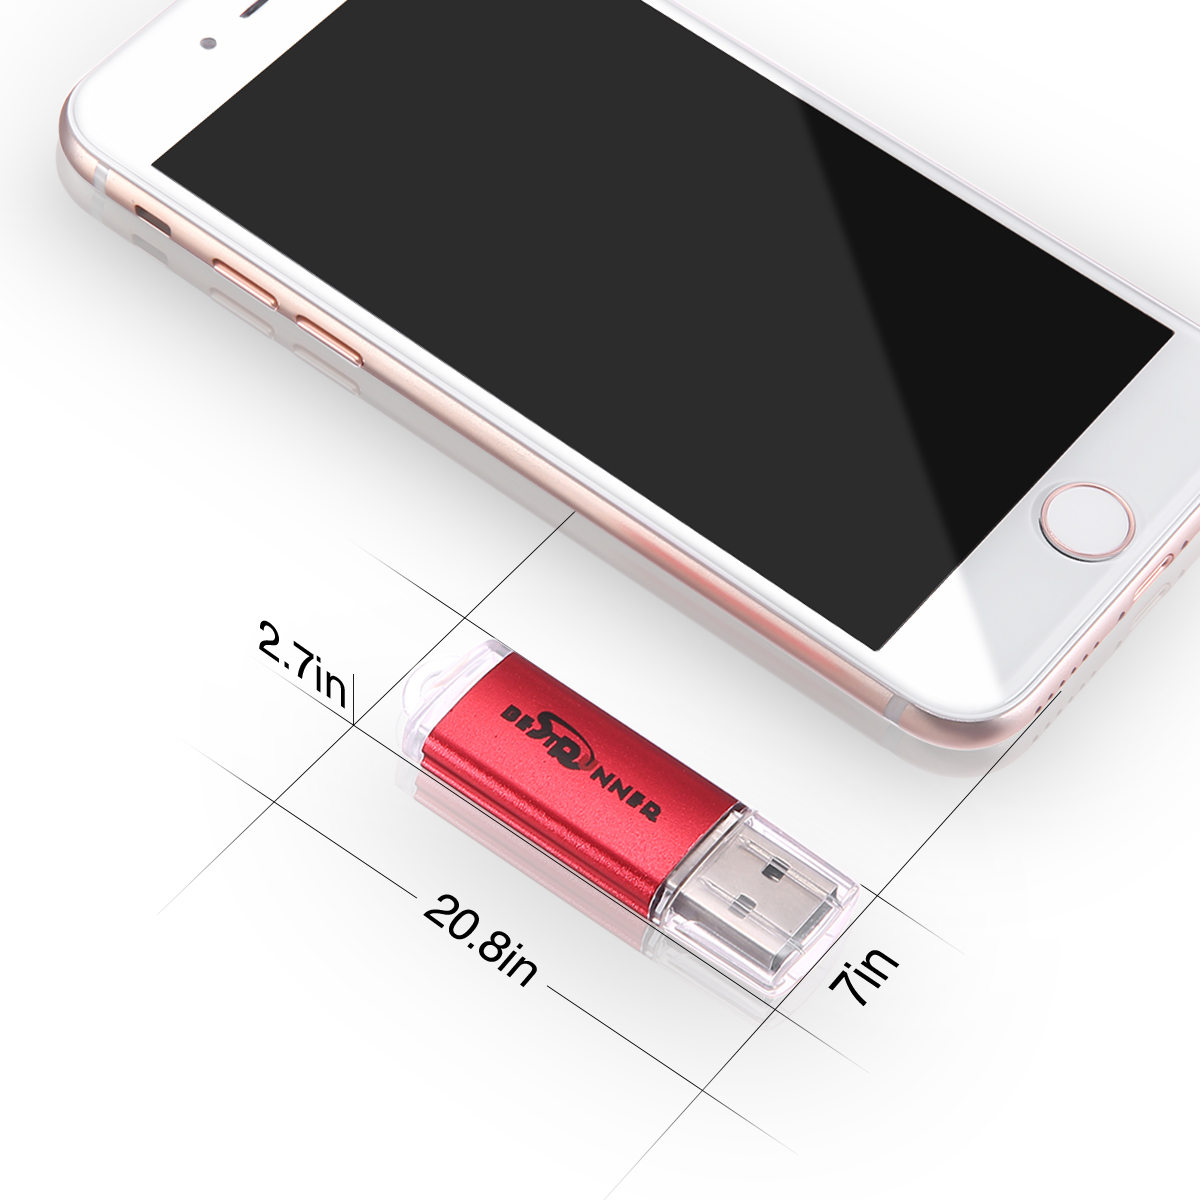 Bestrunner-10Pcs-128MB-USB-20-Flash-Drive-Candy-Red-Color-Memory-Pen-Storage-Thumb-U-Disk-1939063-6